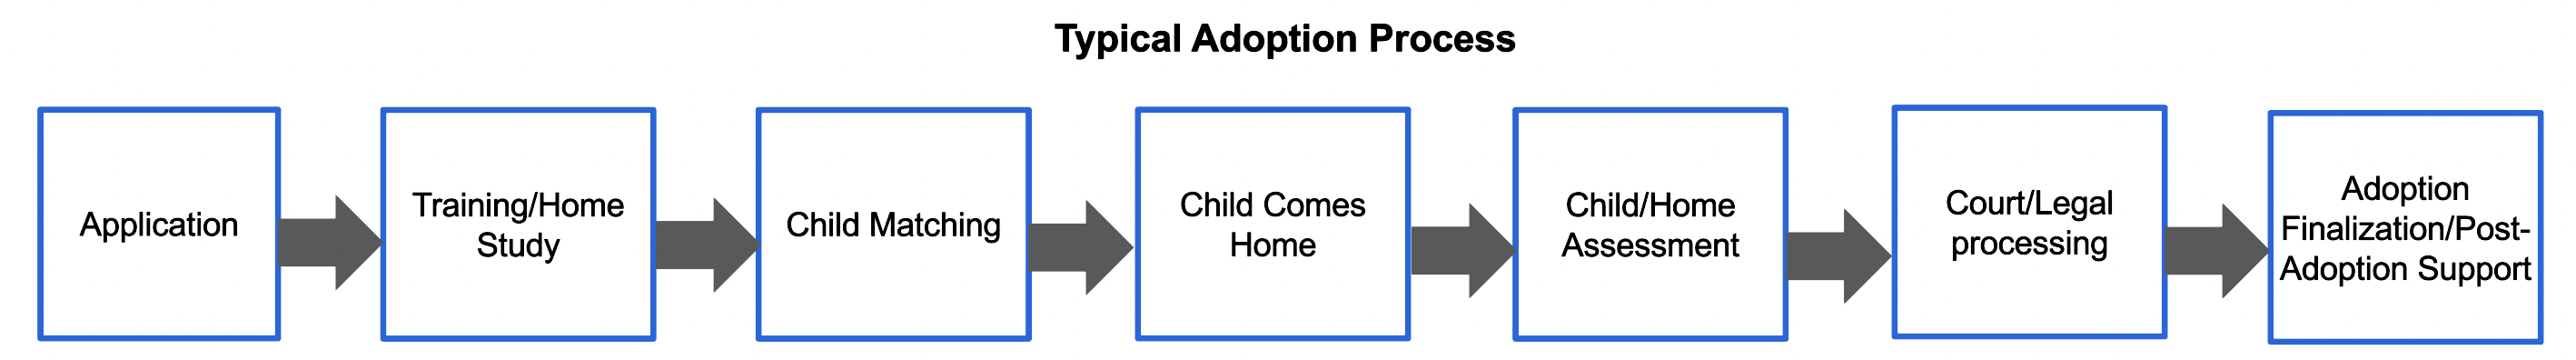 typical child adoption process united states